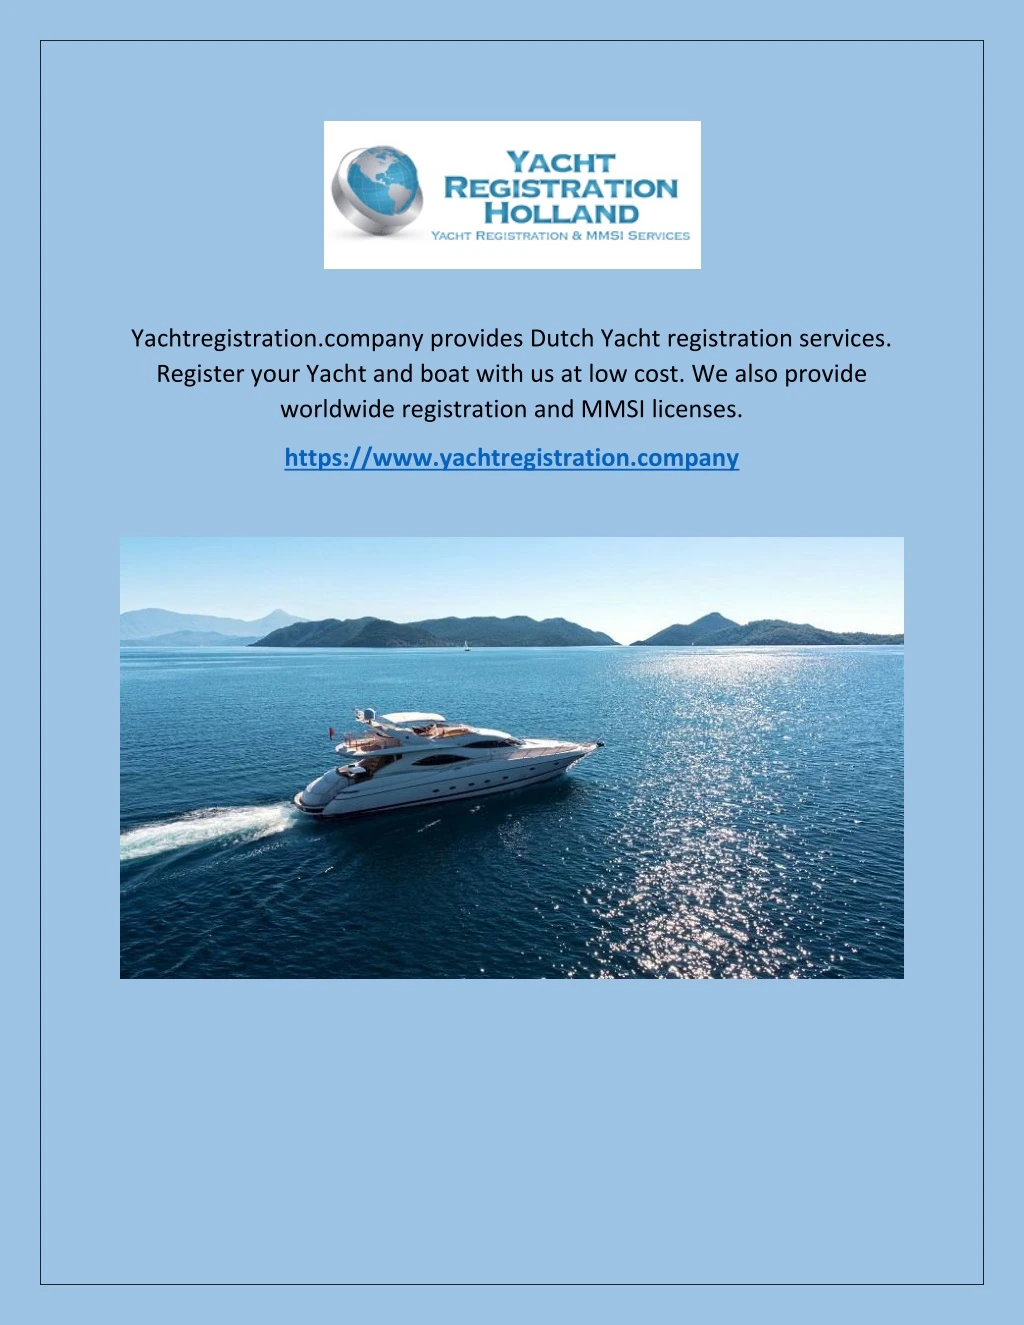 yachtregistration company provides dutch yacht